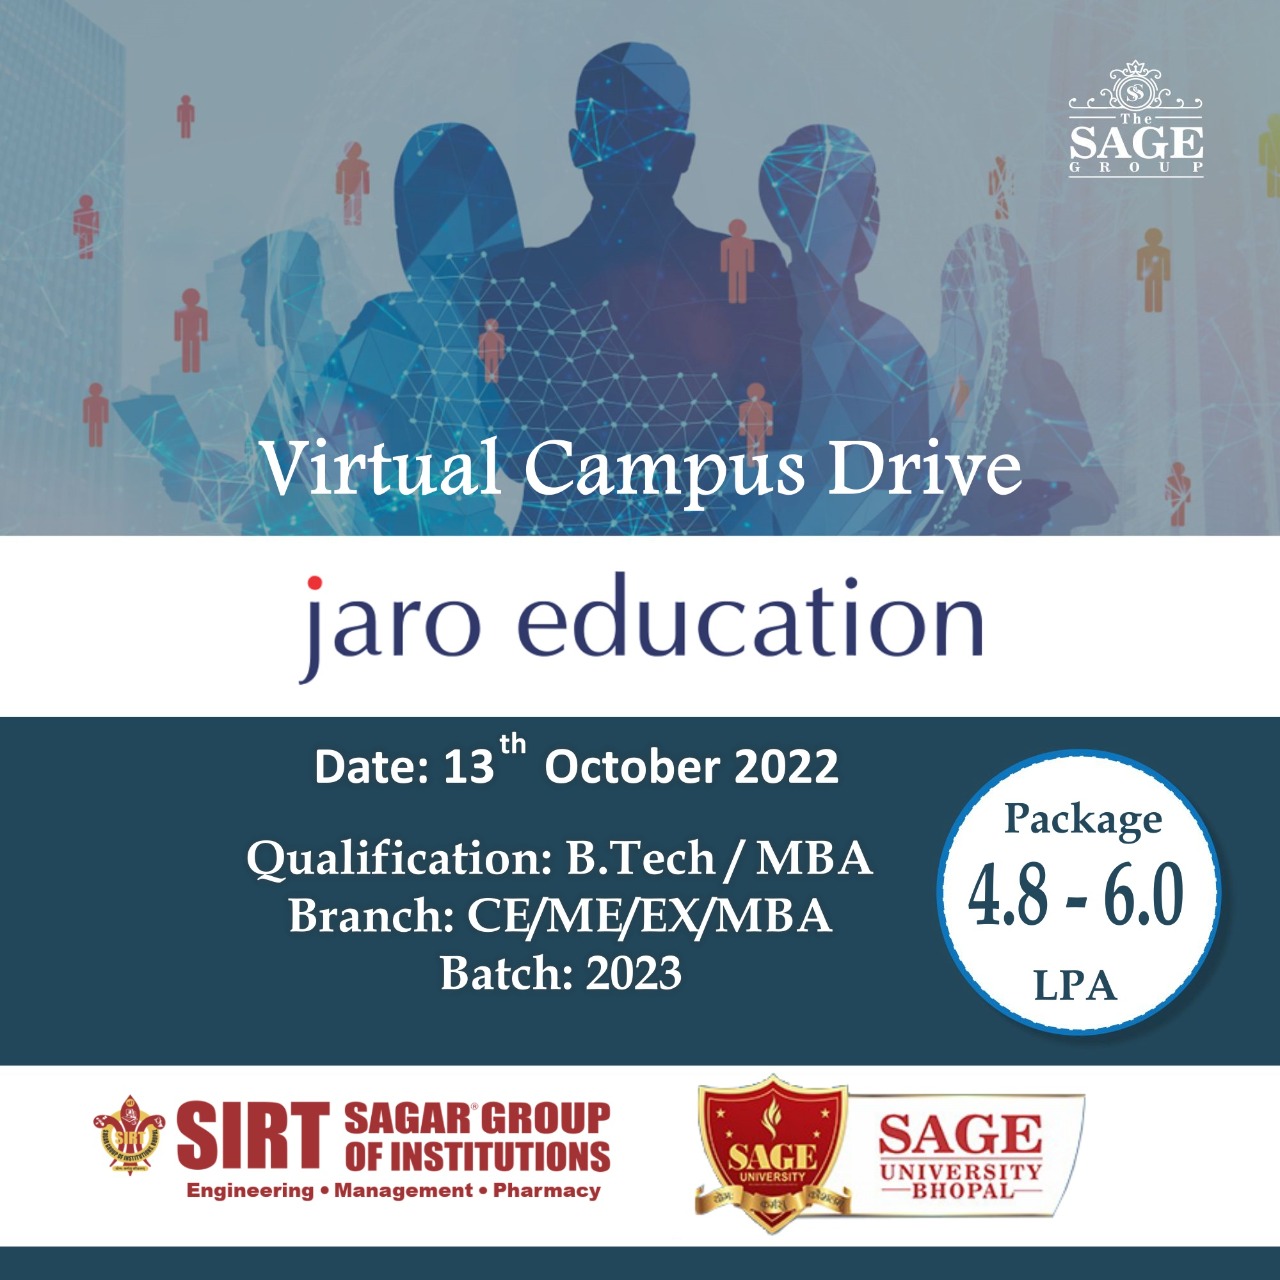 JARO EDUCATION, BTECH /MBA/ME/CE, 2023, 2022-10-13